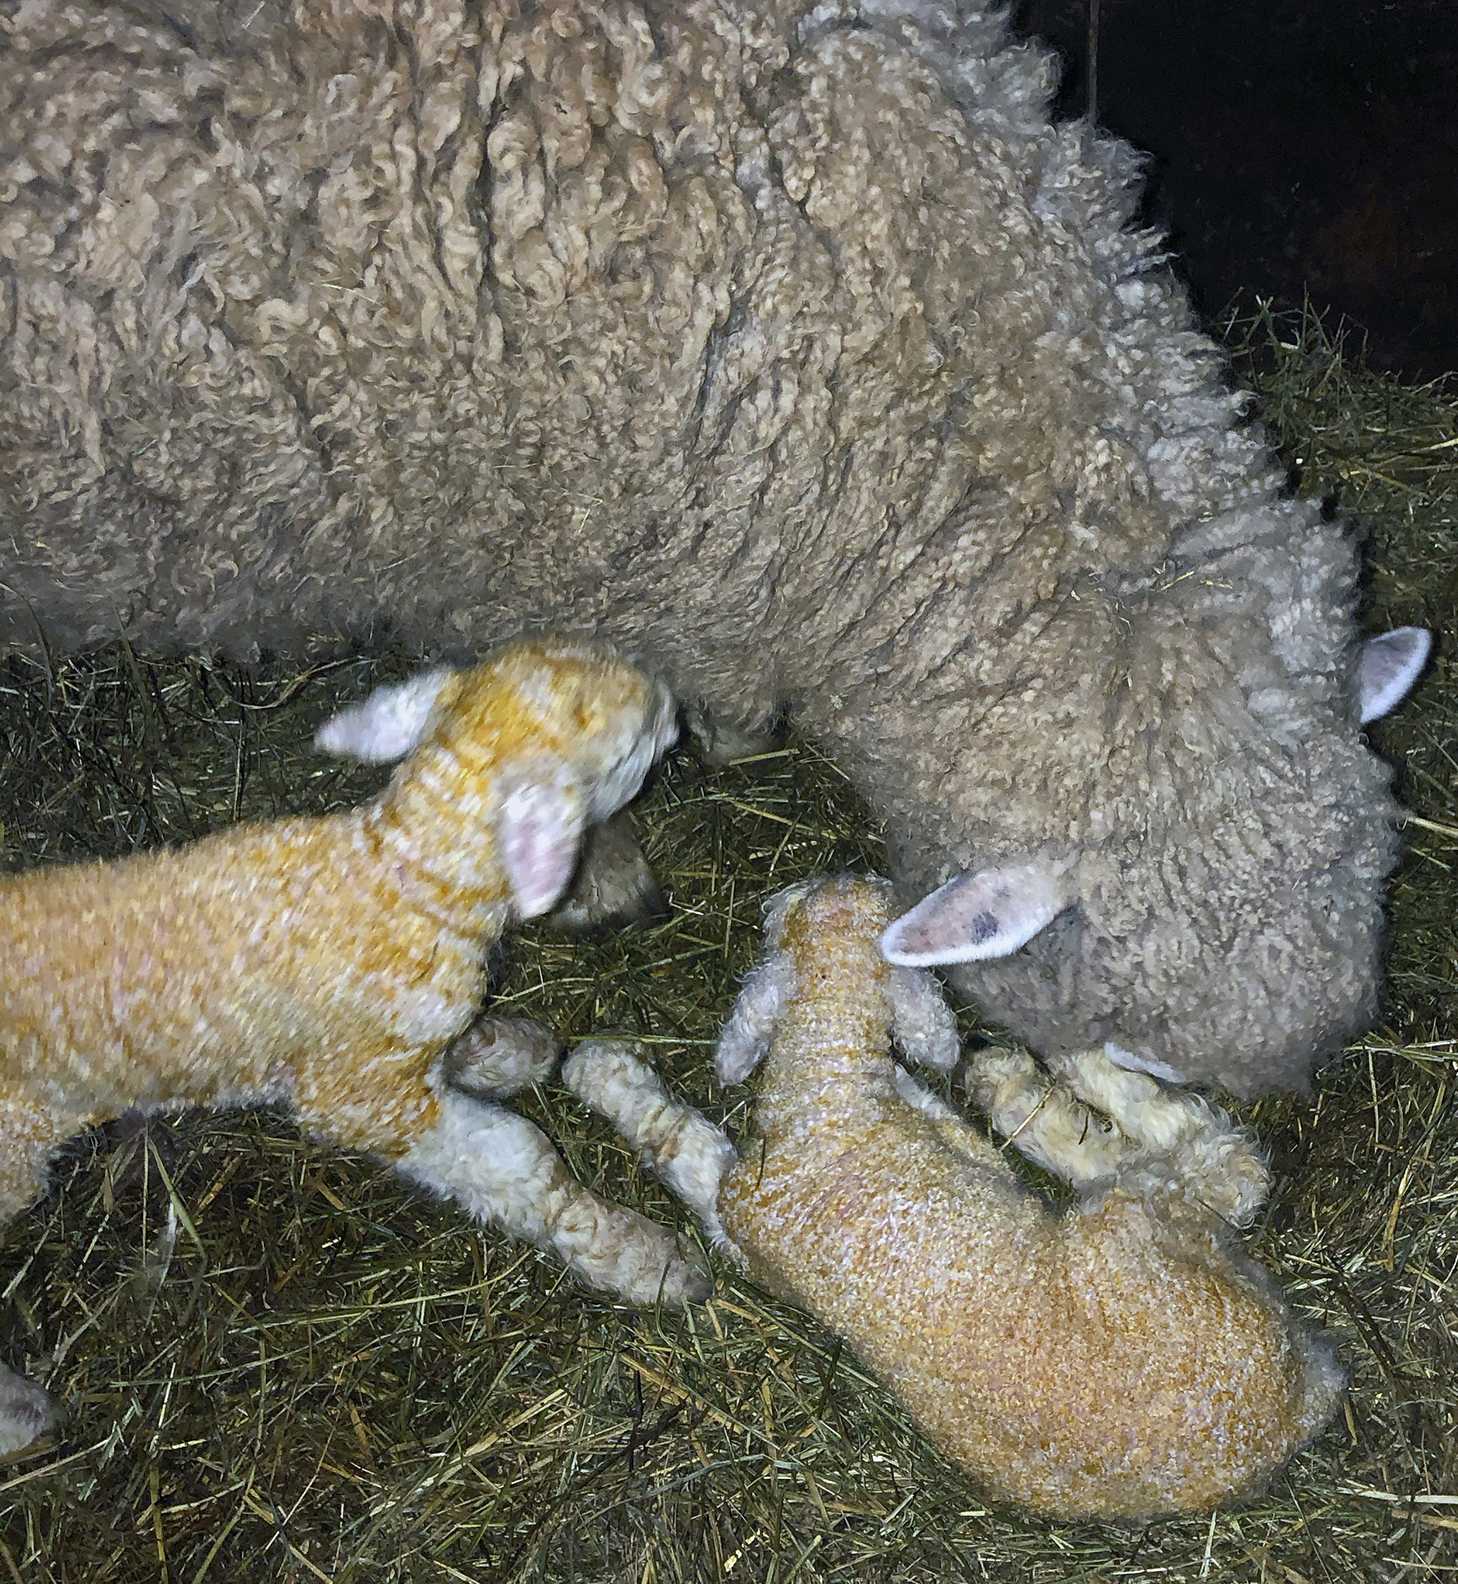 New Born Lambs